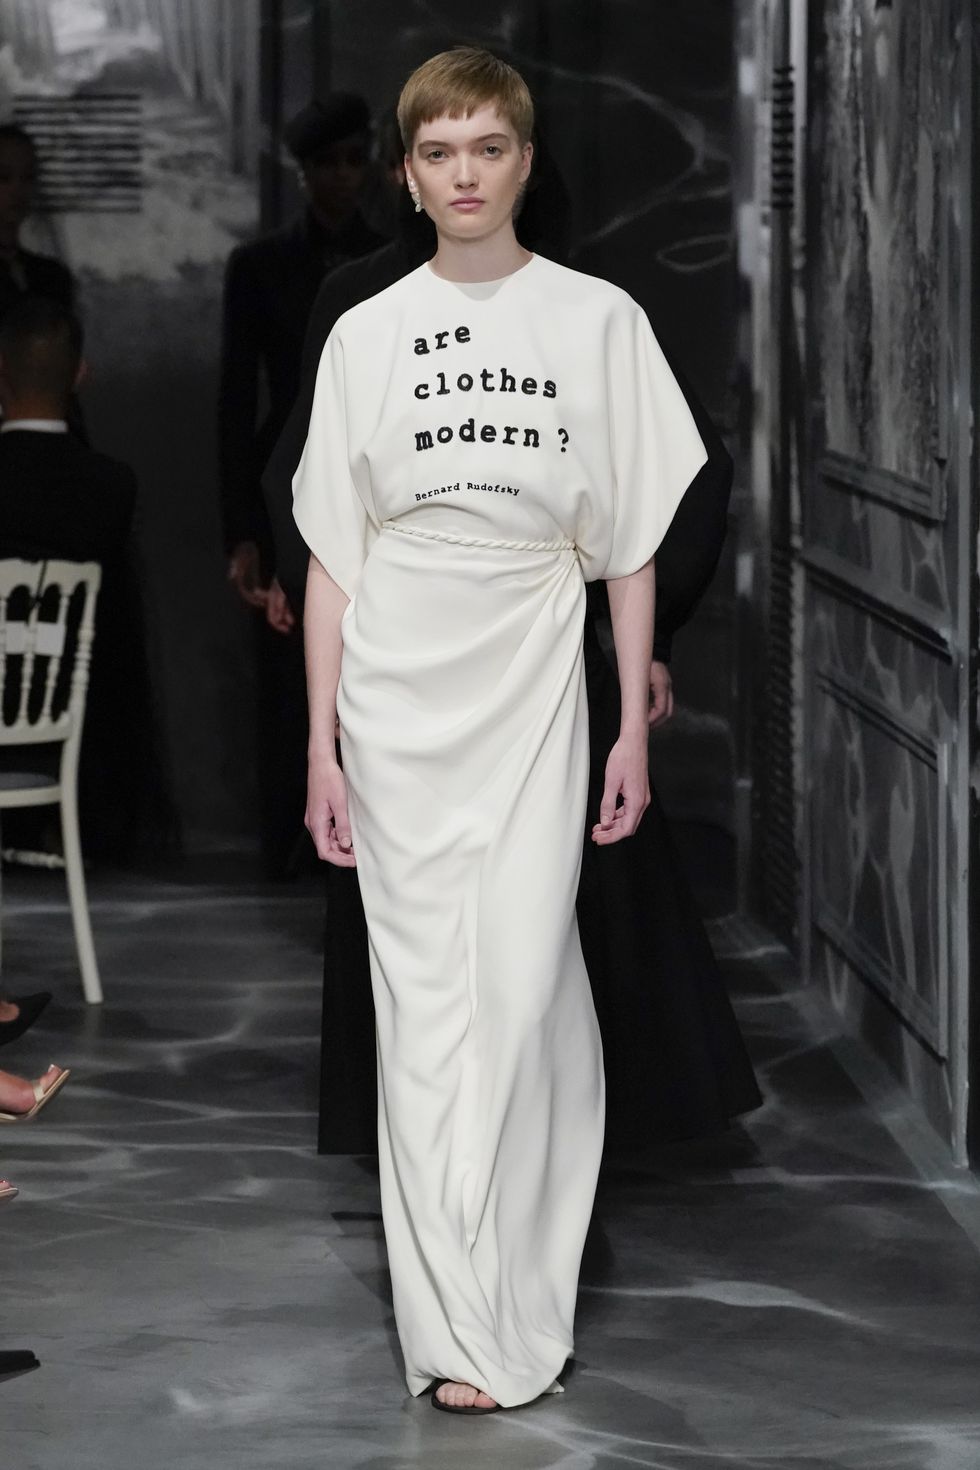 Dior Couture slogan tee